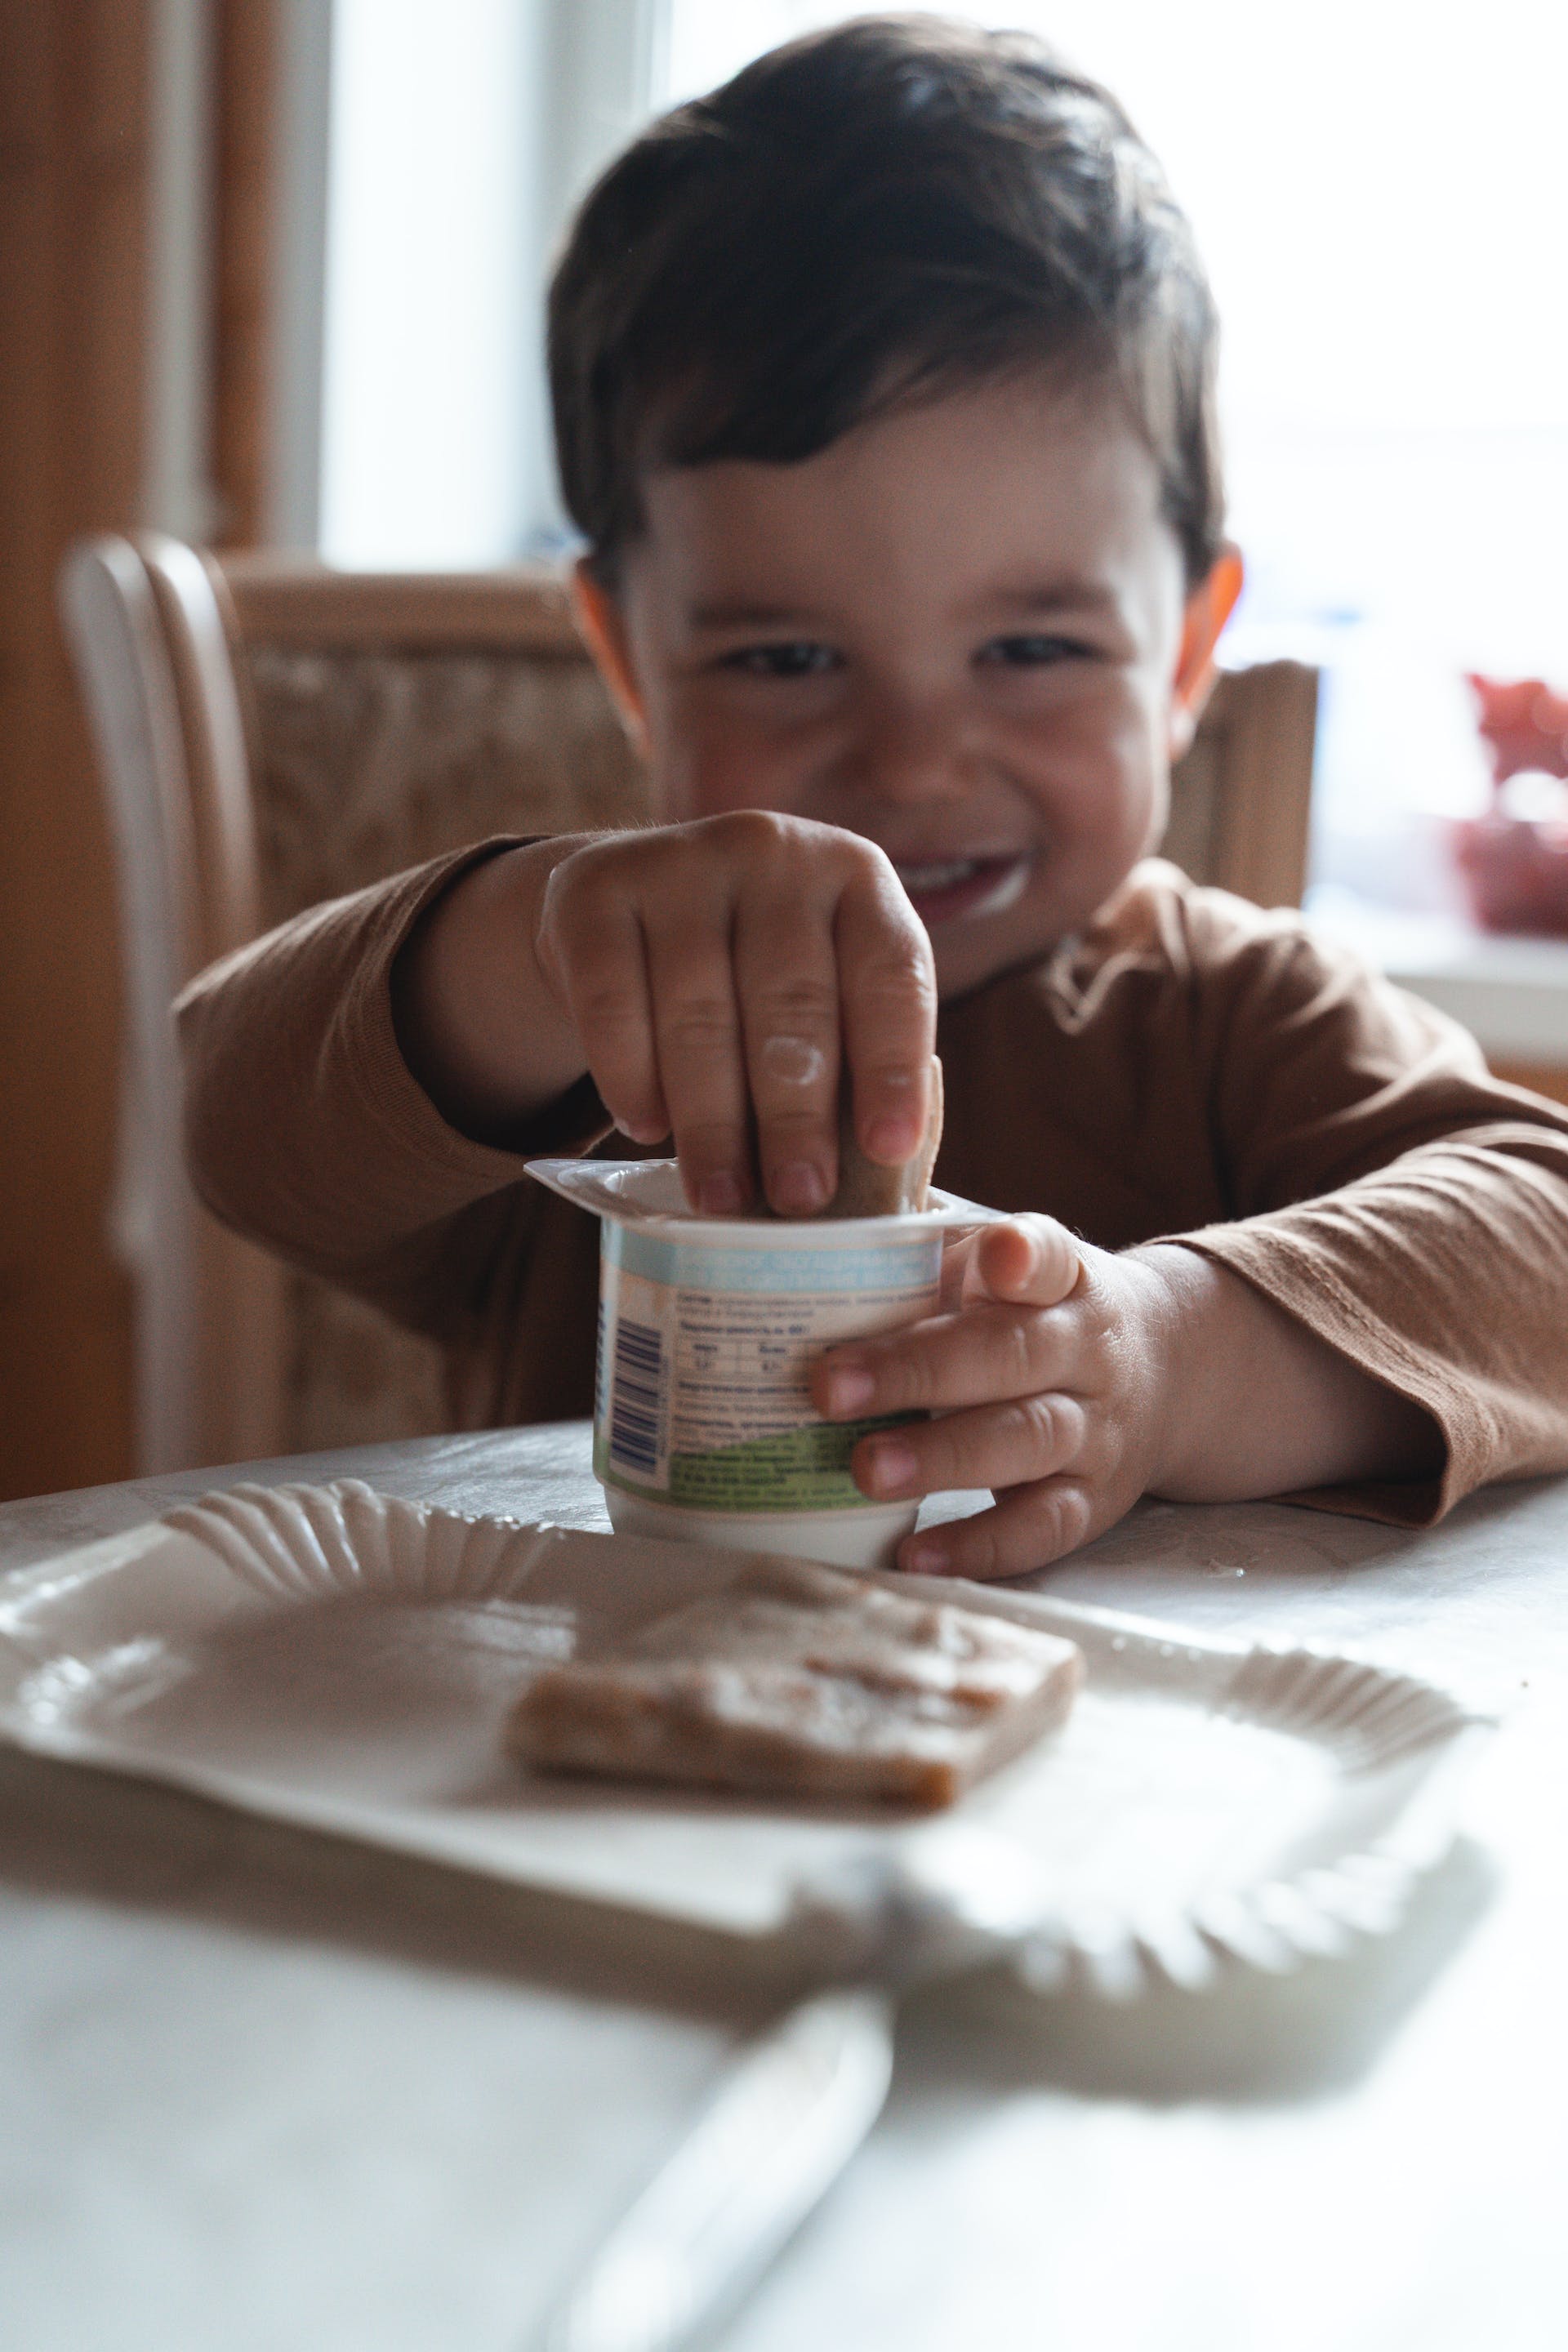 Little boy eating yogurt | Source: Pexels